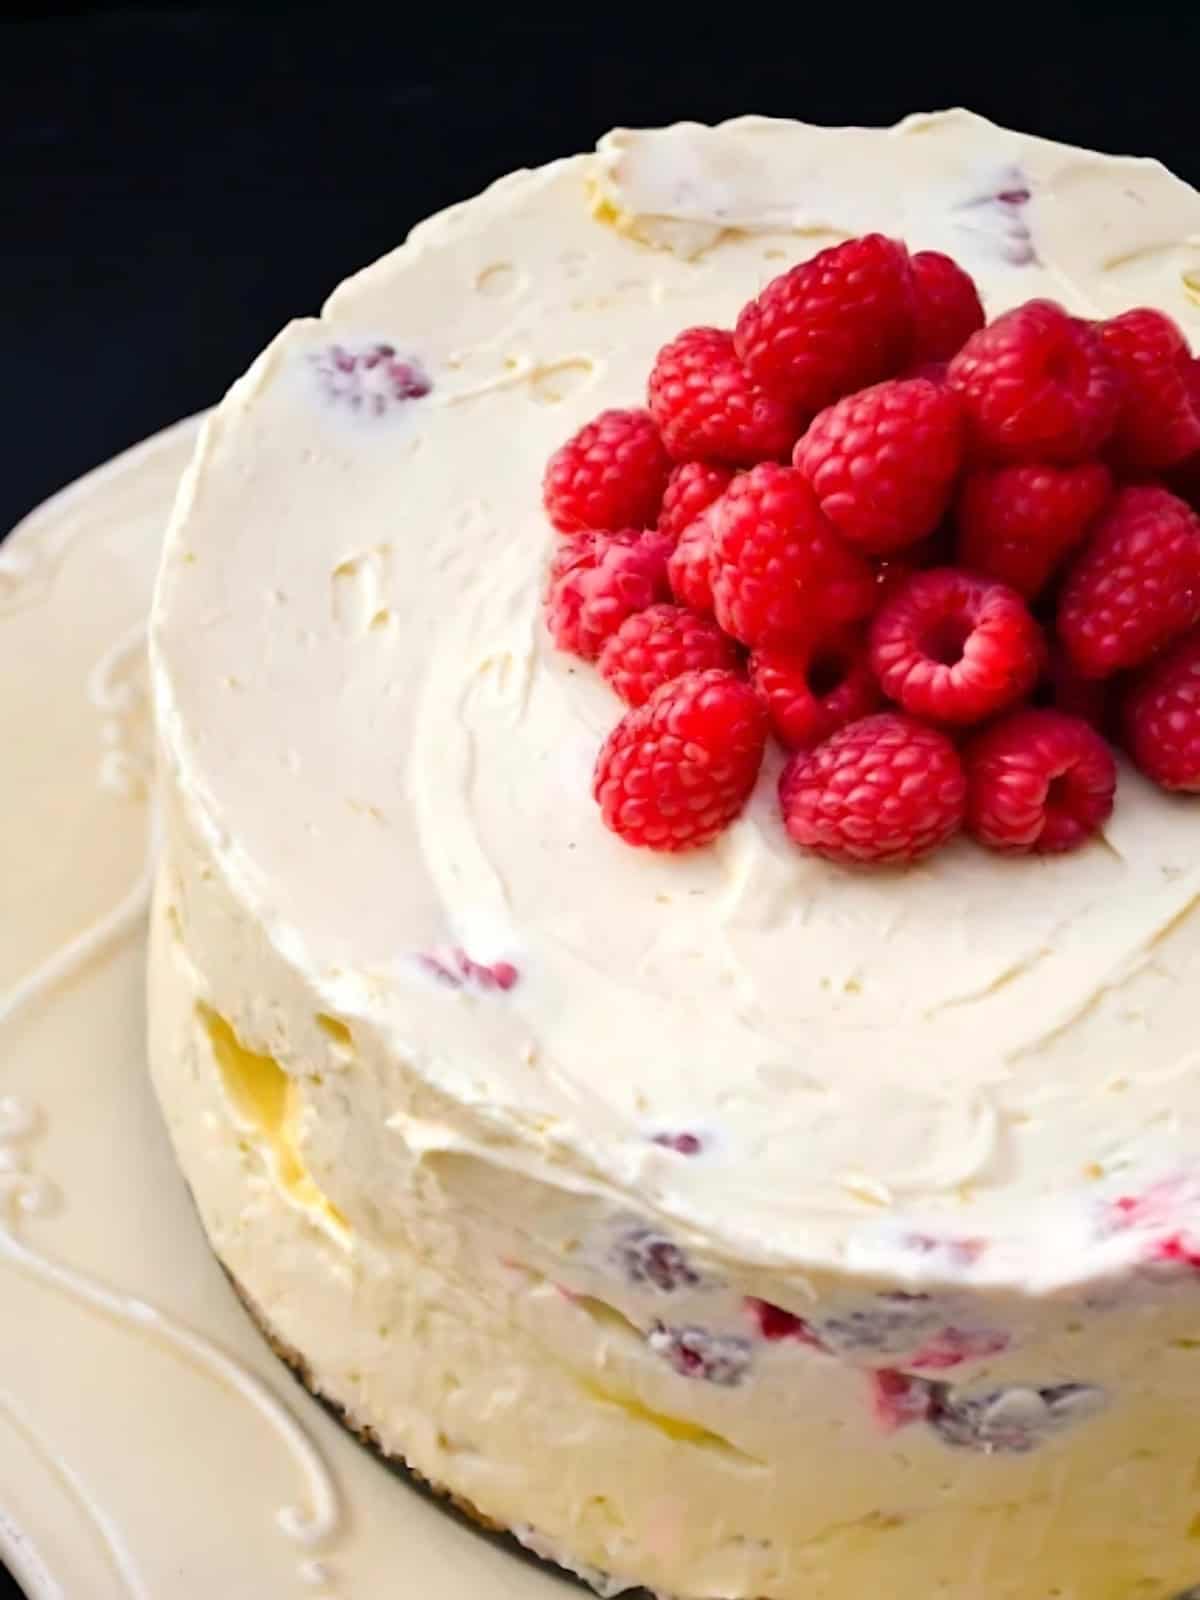 Lemon Curd Raspberry Cheesecake topped with raspberries.